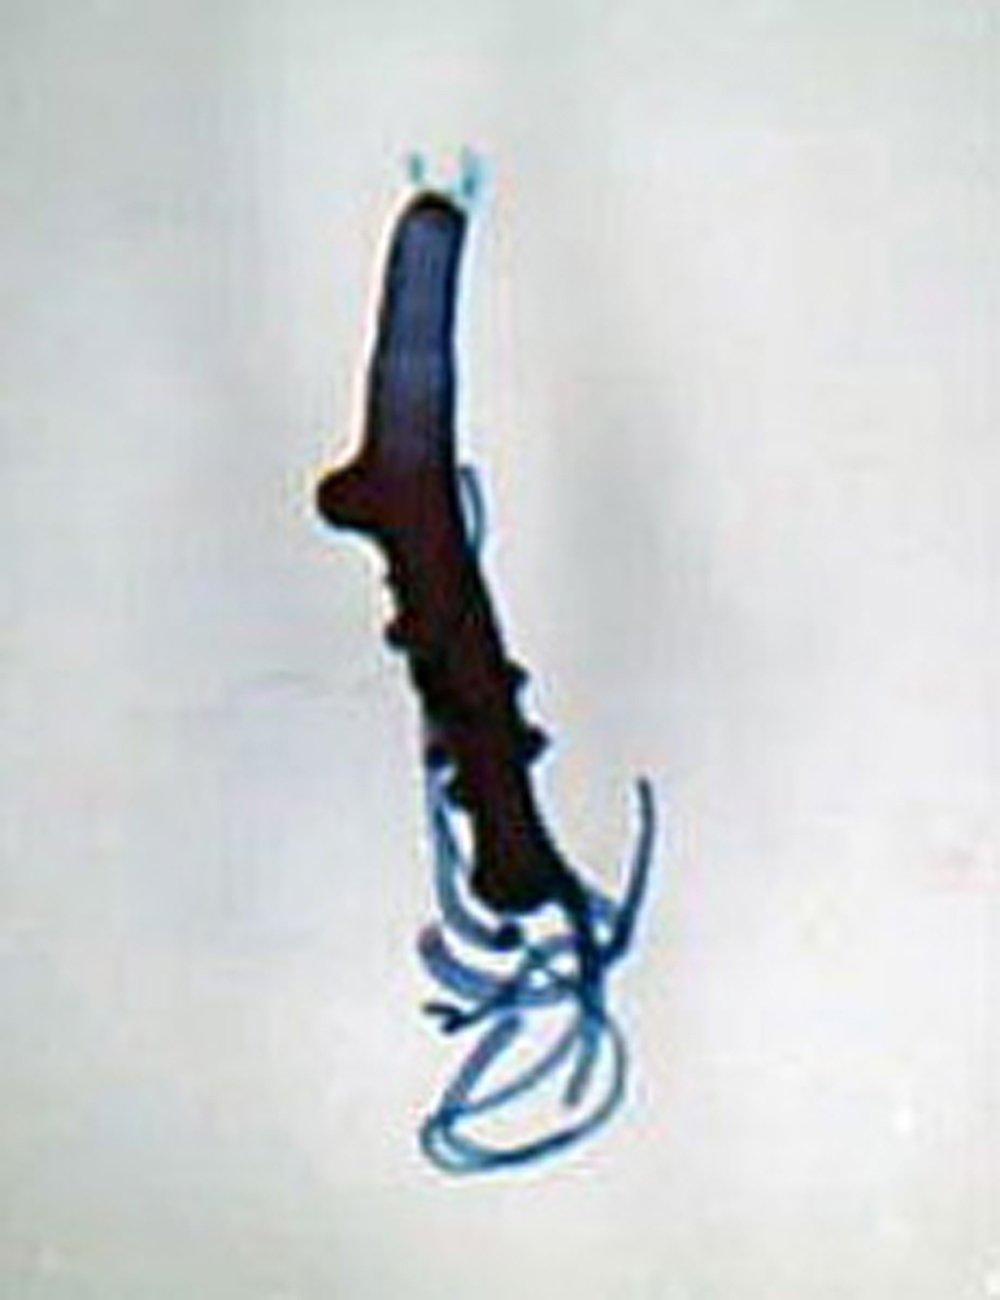 Hydra, budding, whole mount (prepared microscope slide)